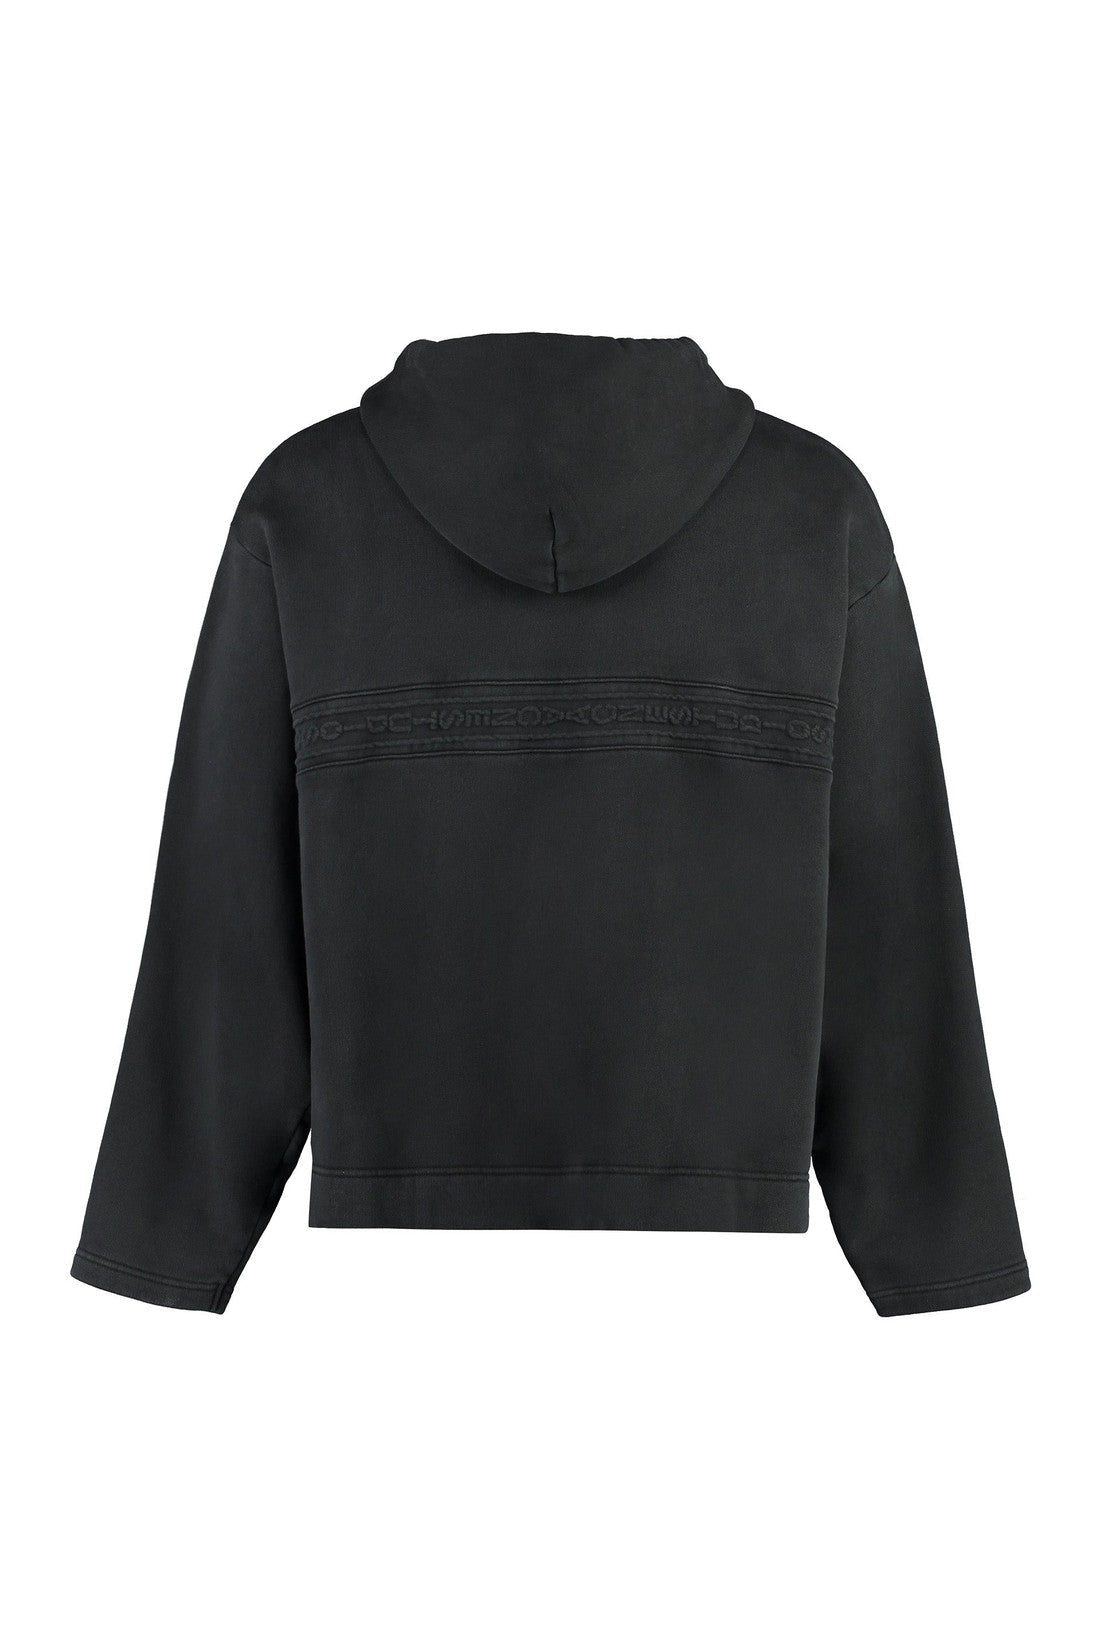 Acne Studios-OUTLET-SALE-Hooded sweatshirt-ARCHIVIST